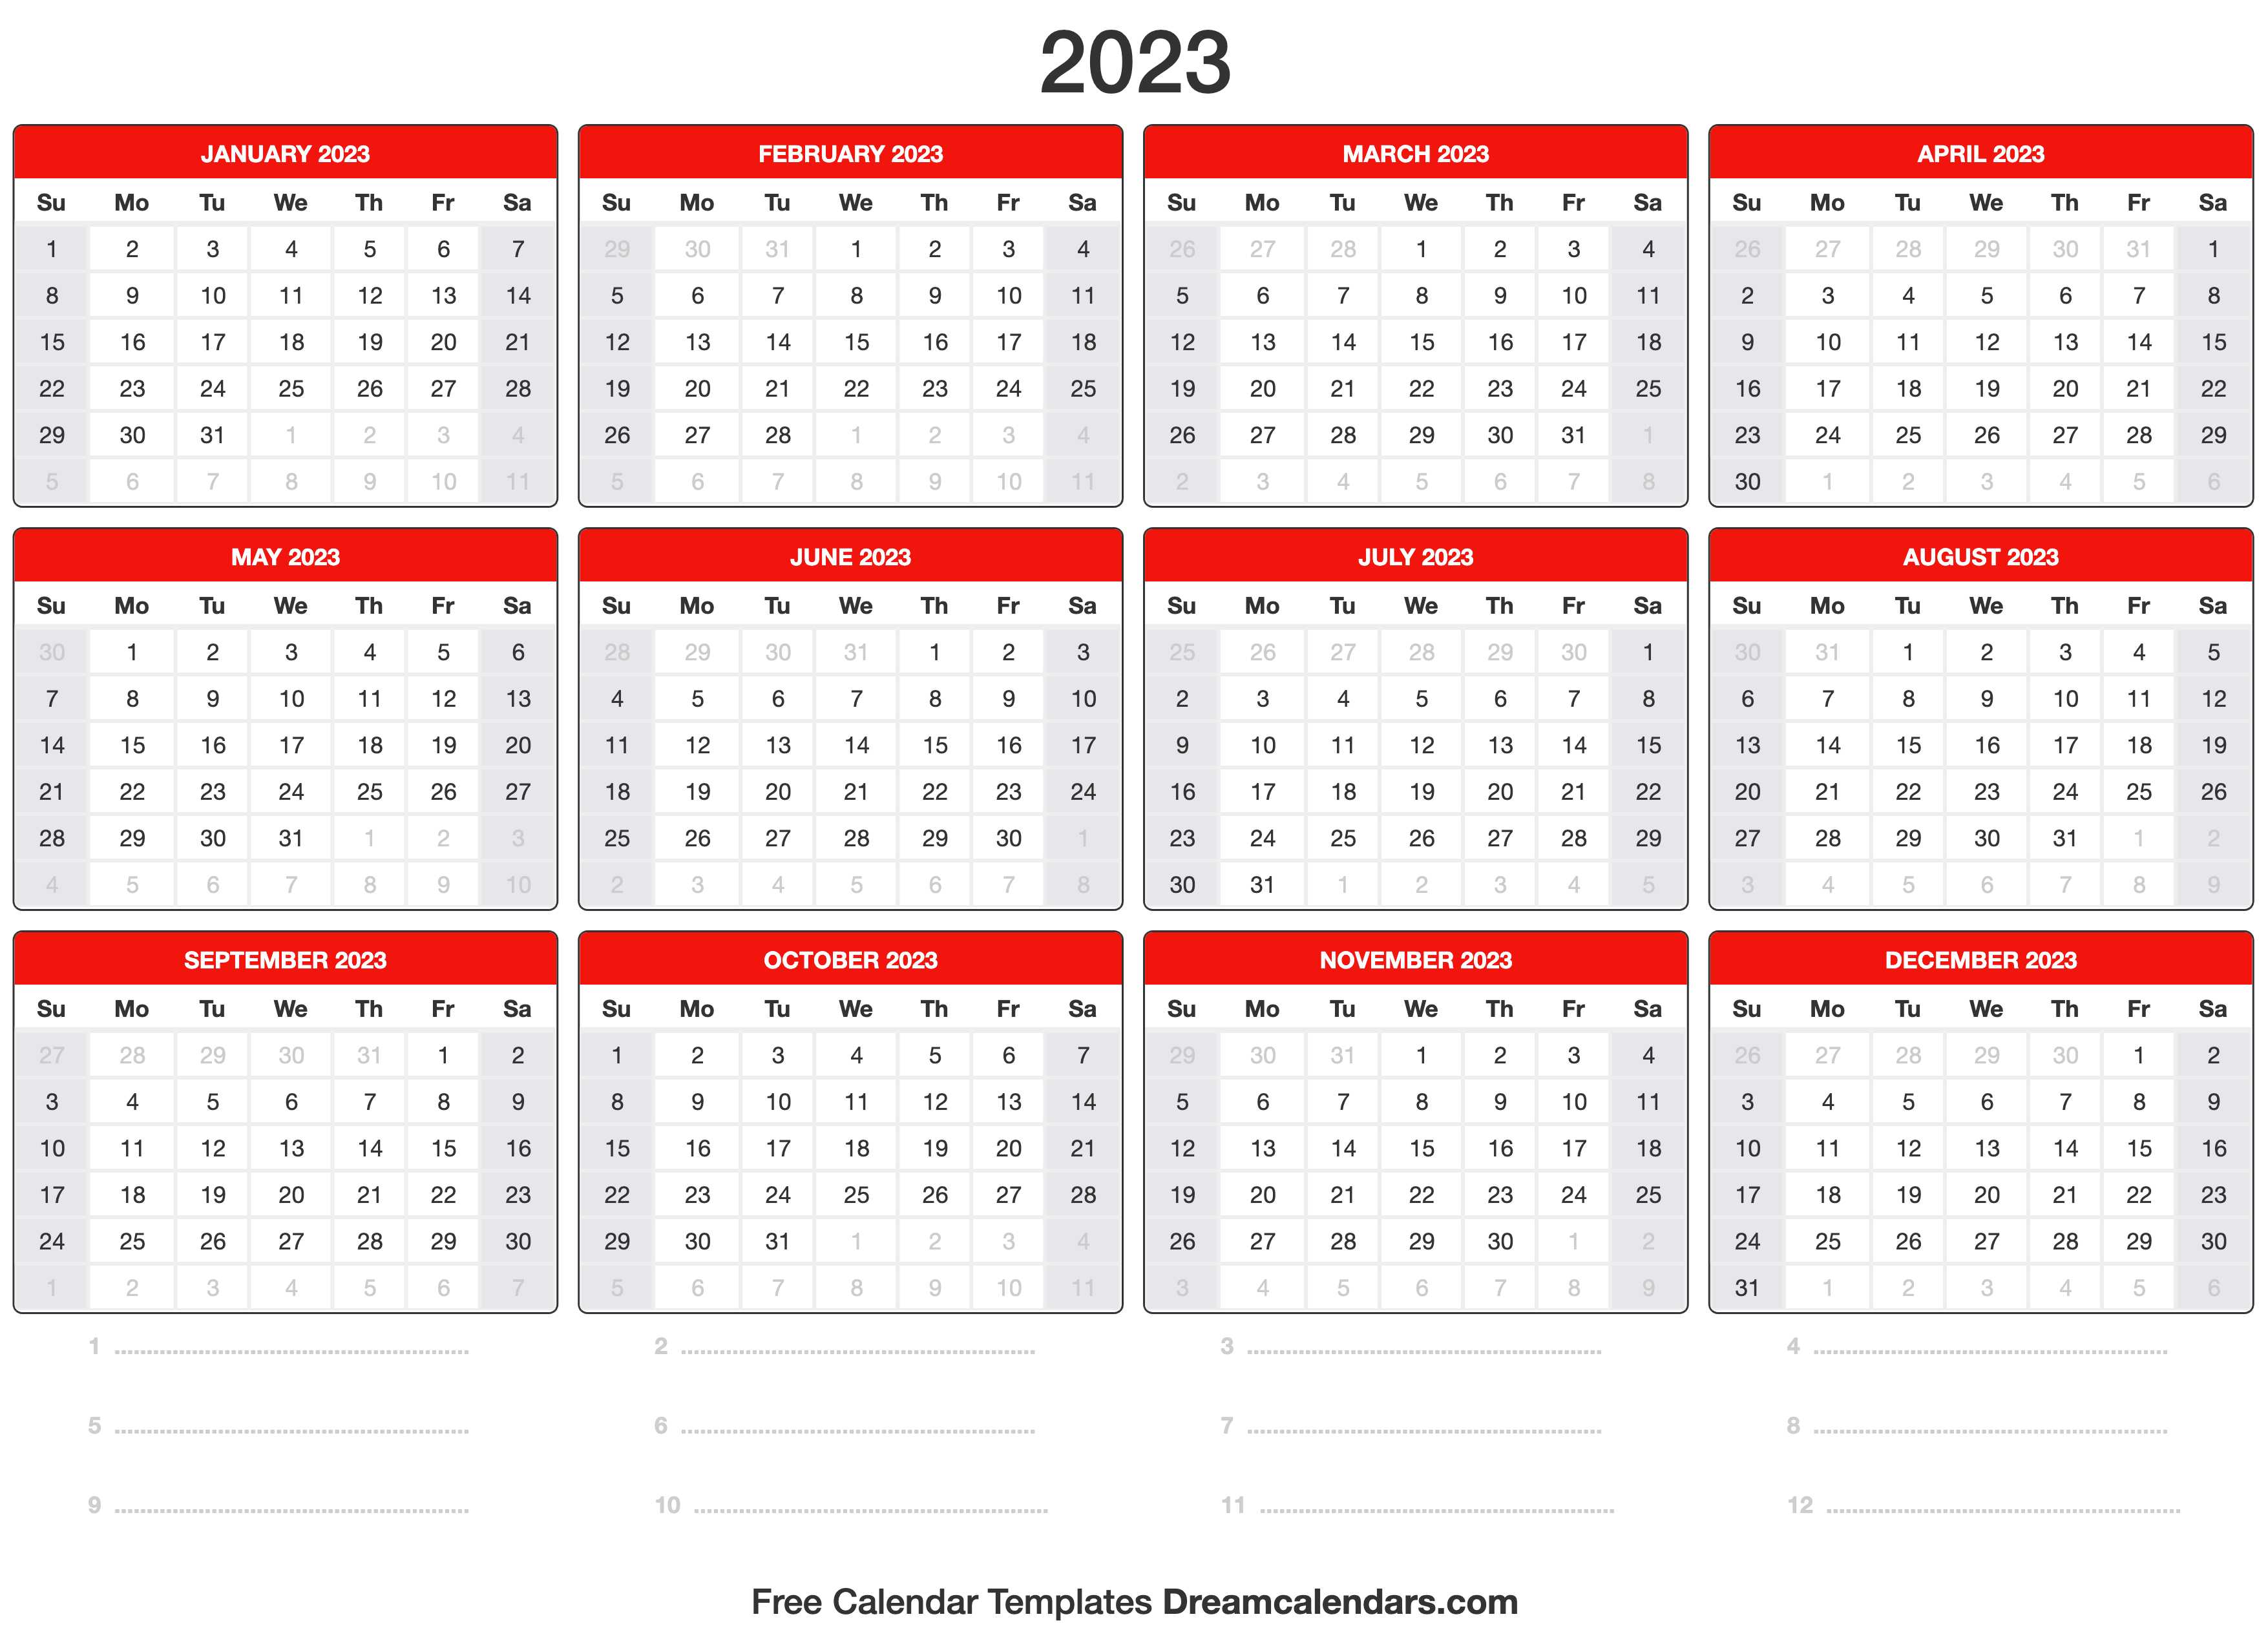 2023-calendar-templates-and-images-2023-calendar-2023-calendar